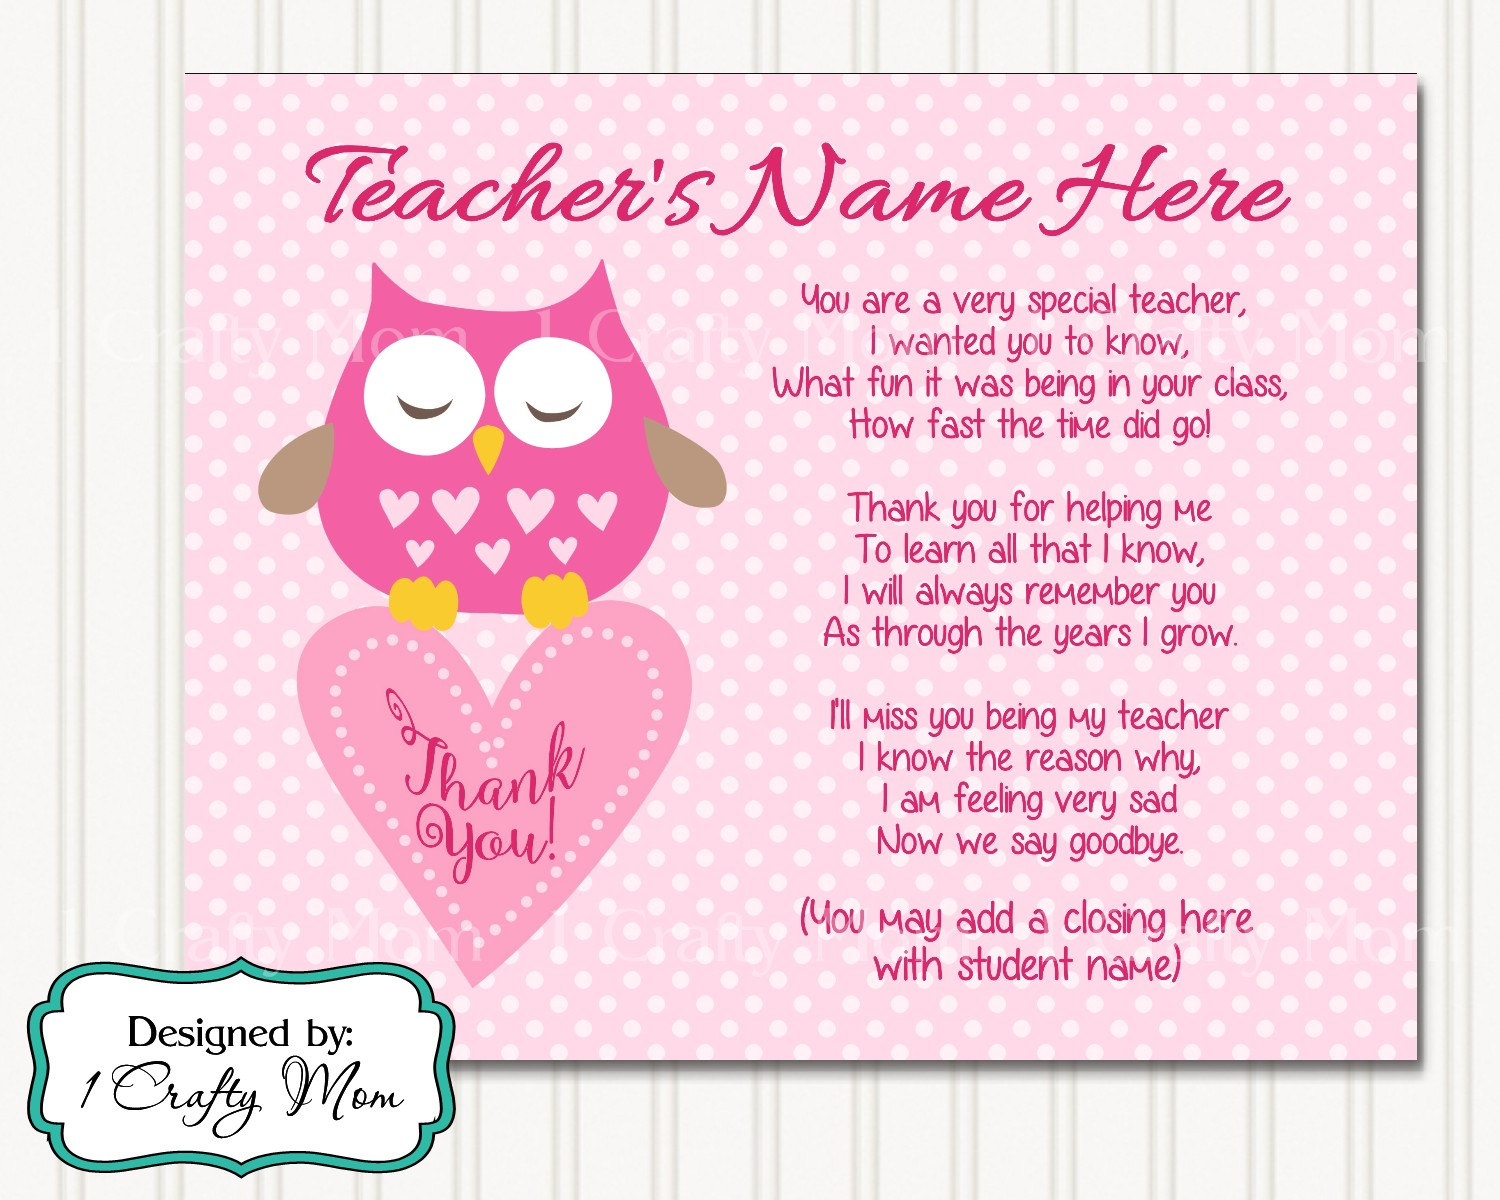 The special teacher. Thank you teacher poem. Poems for teachers. What is a teacher? Poem. Thank you poem to the teacher with name.